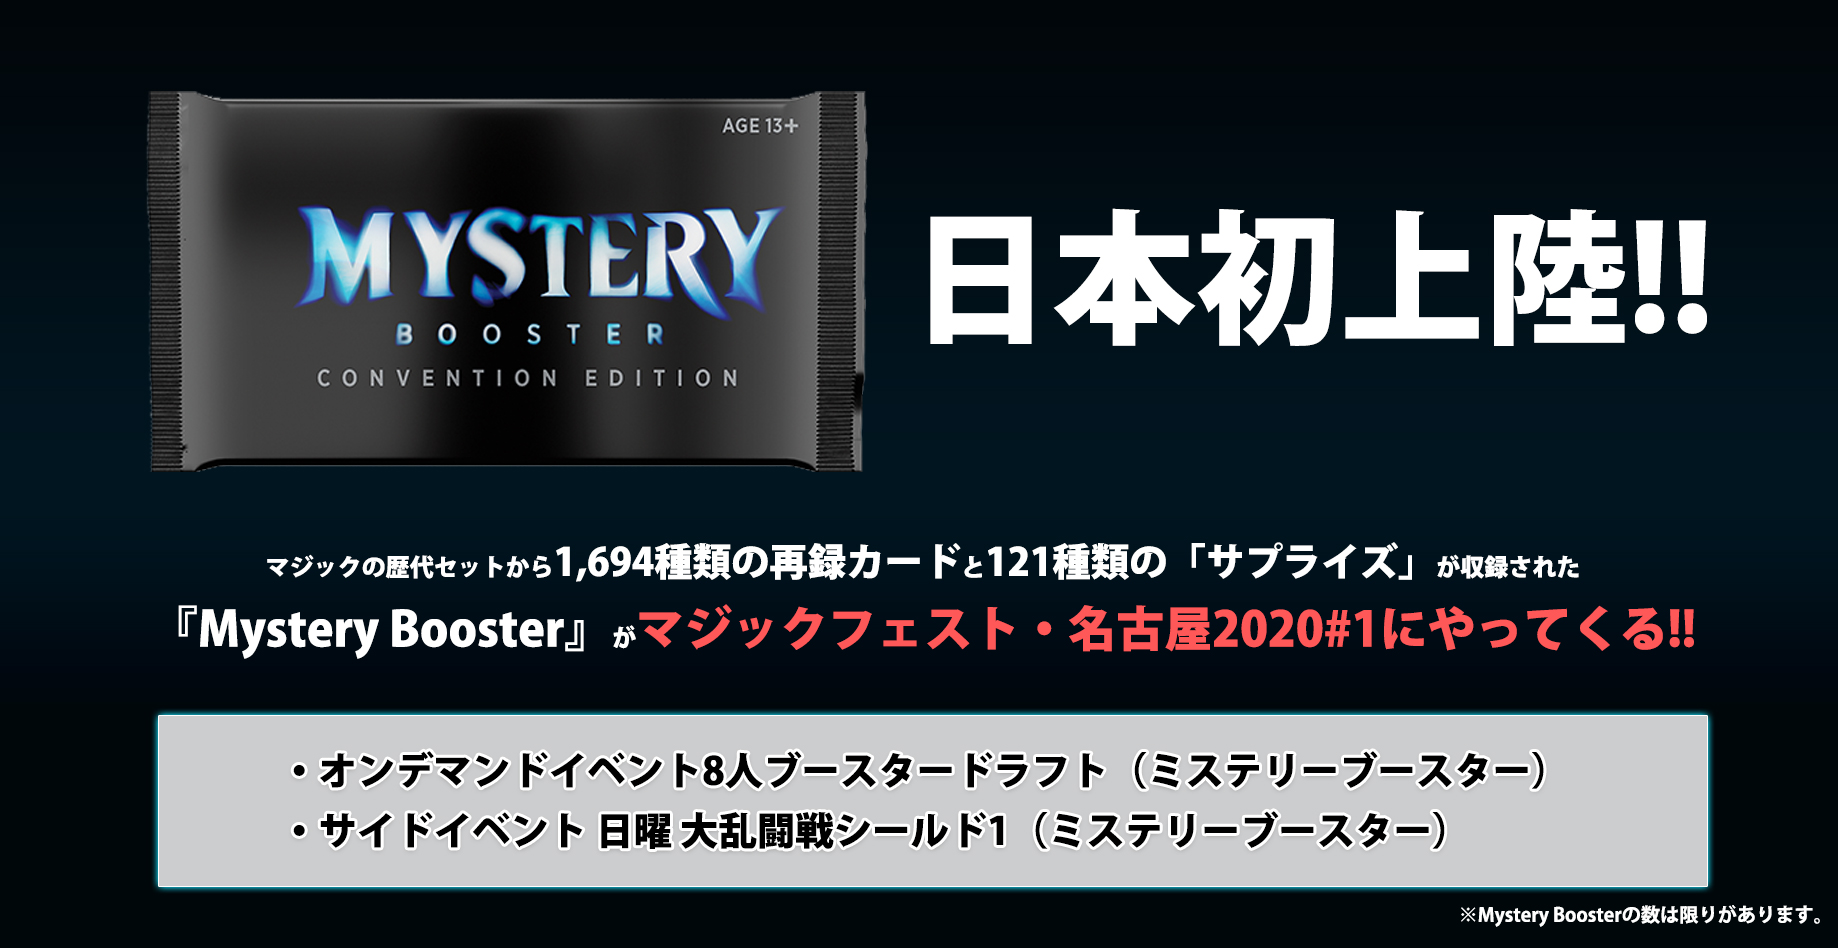 magicfest-nagoya-mystery-booster